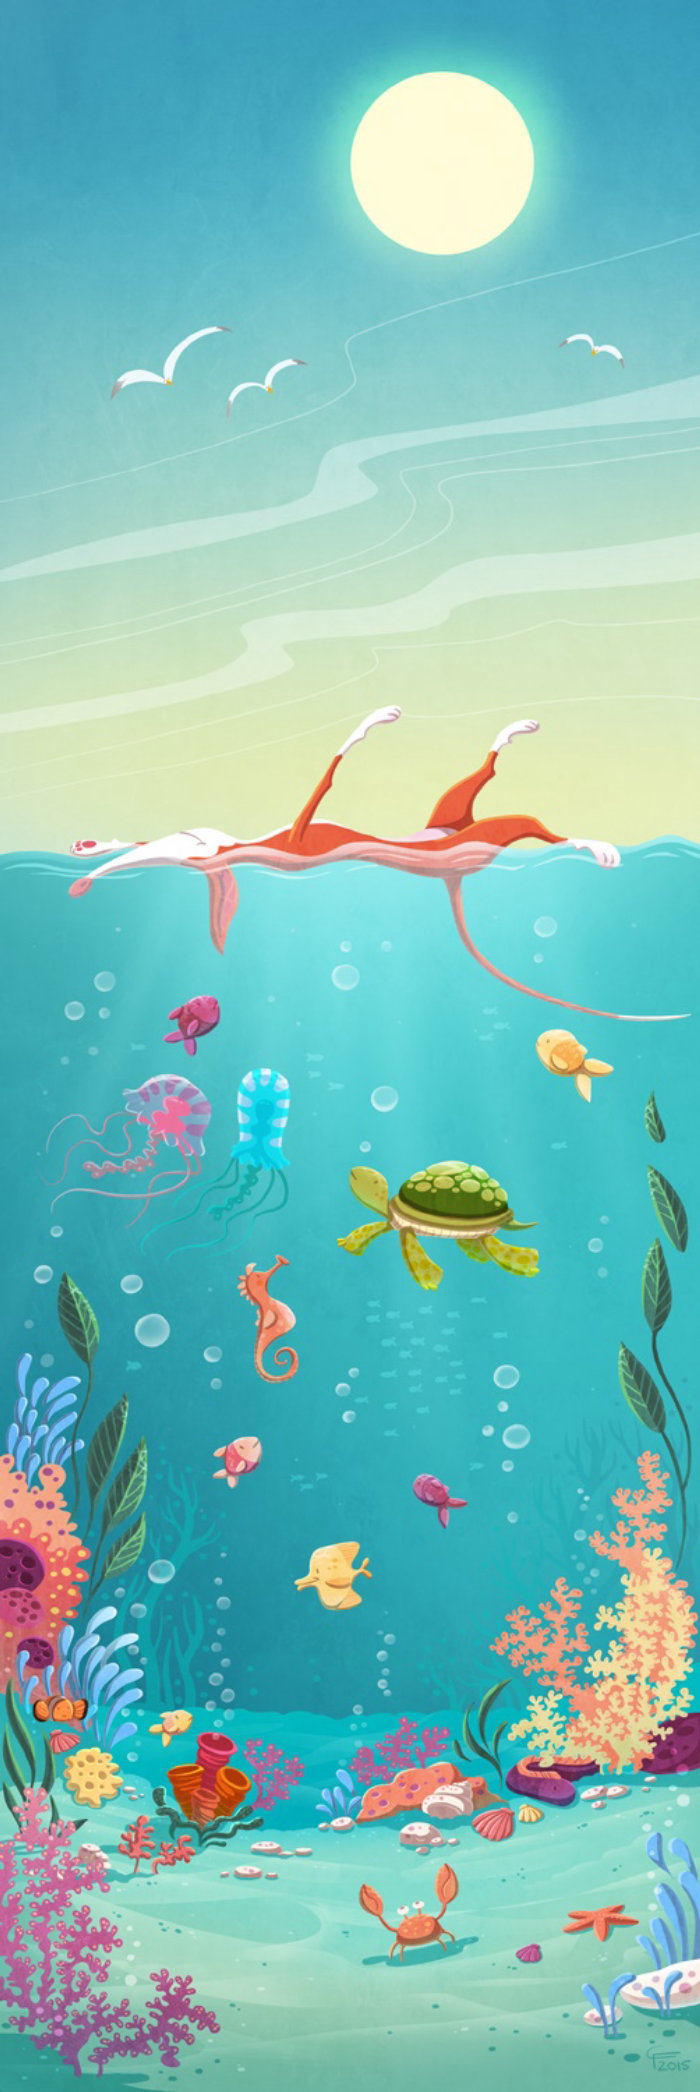 cihldren ilustration animals in ocean
